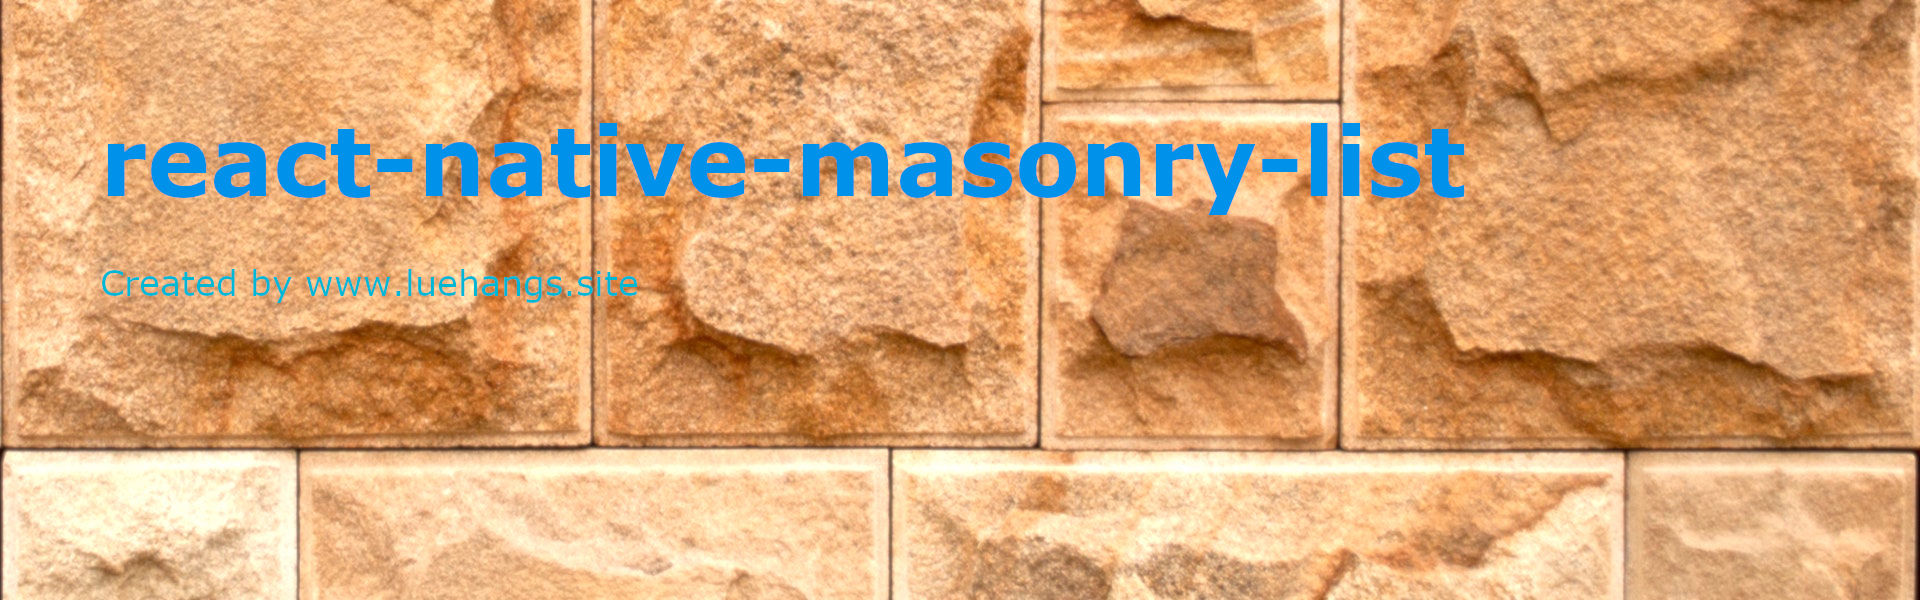 react-native-masonry-list